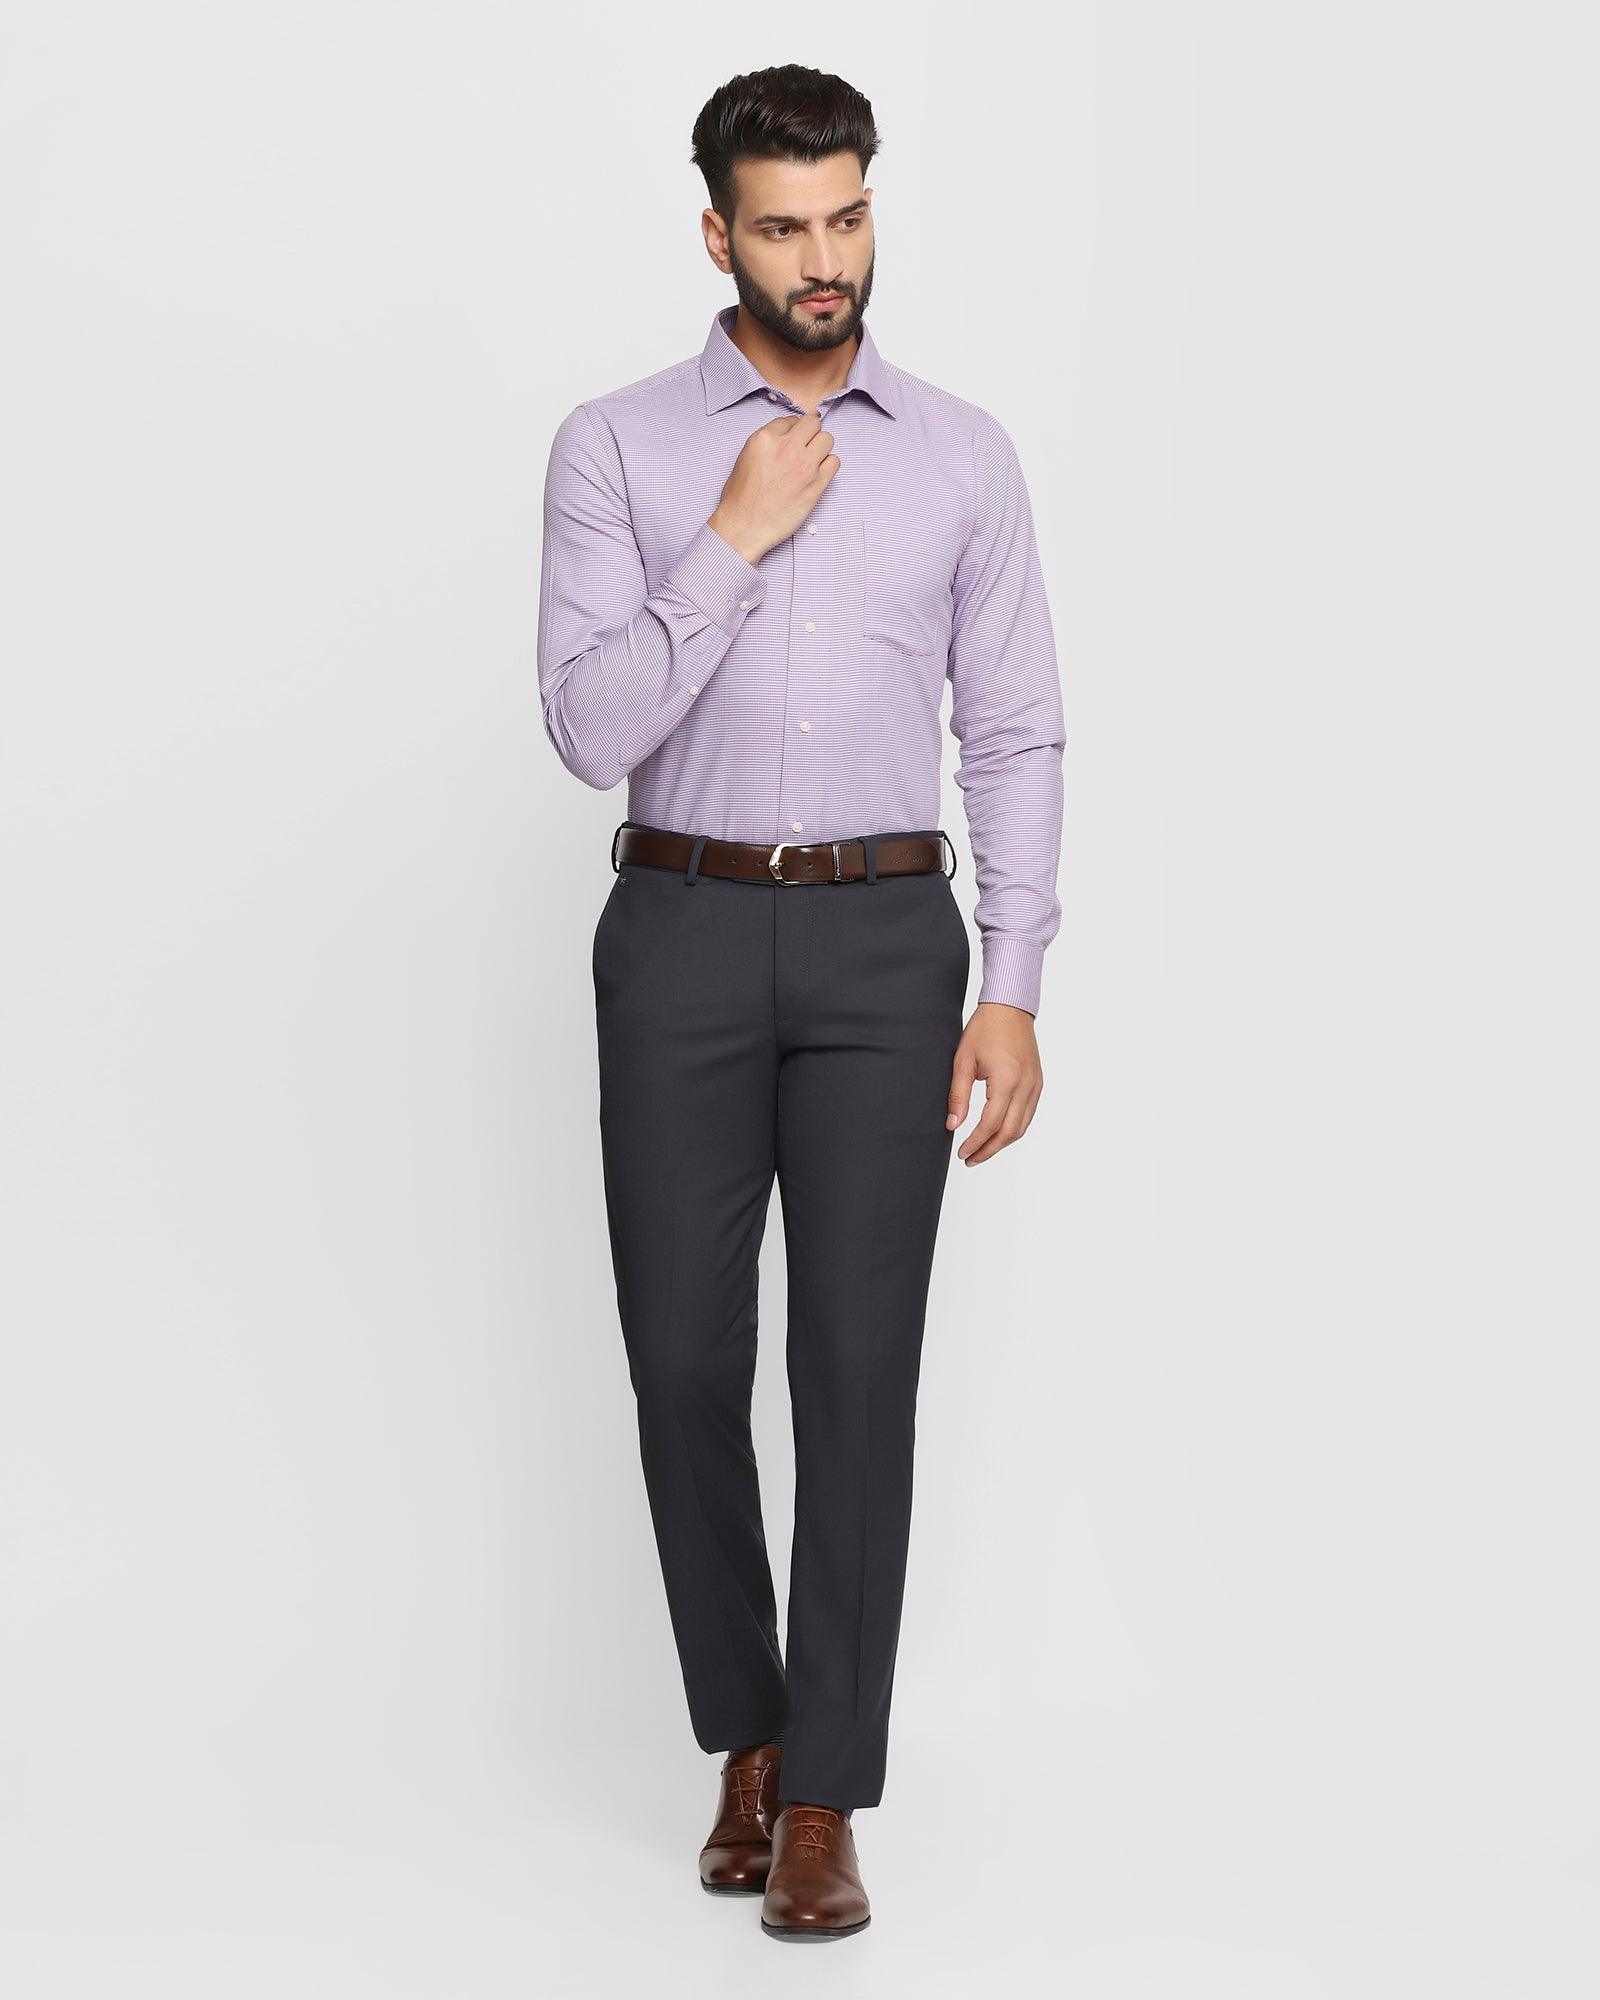 Men Thin Business Casual Dress Formal Classic Pants Trousers Straight Leg  Summer | eBay